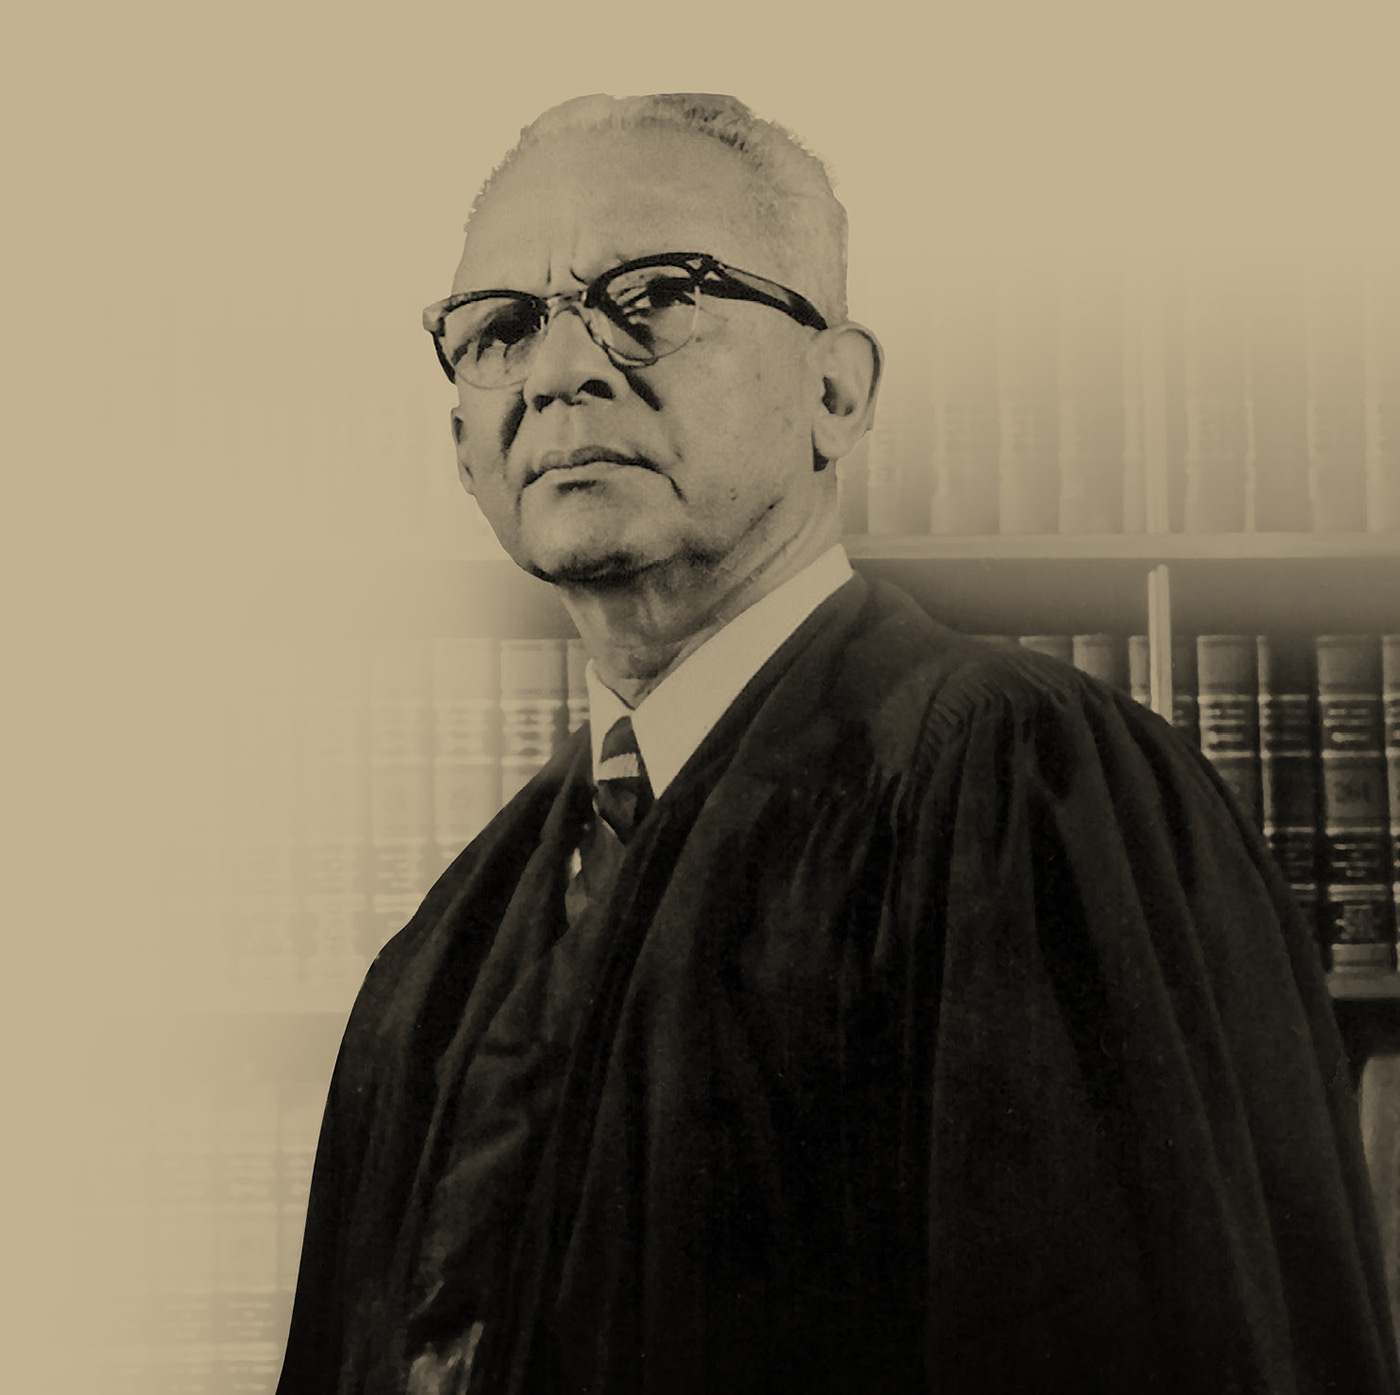 sepia tone picture of Judge Felipe N. Torres in his robe